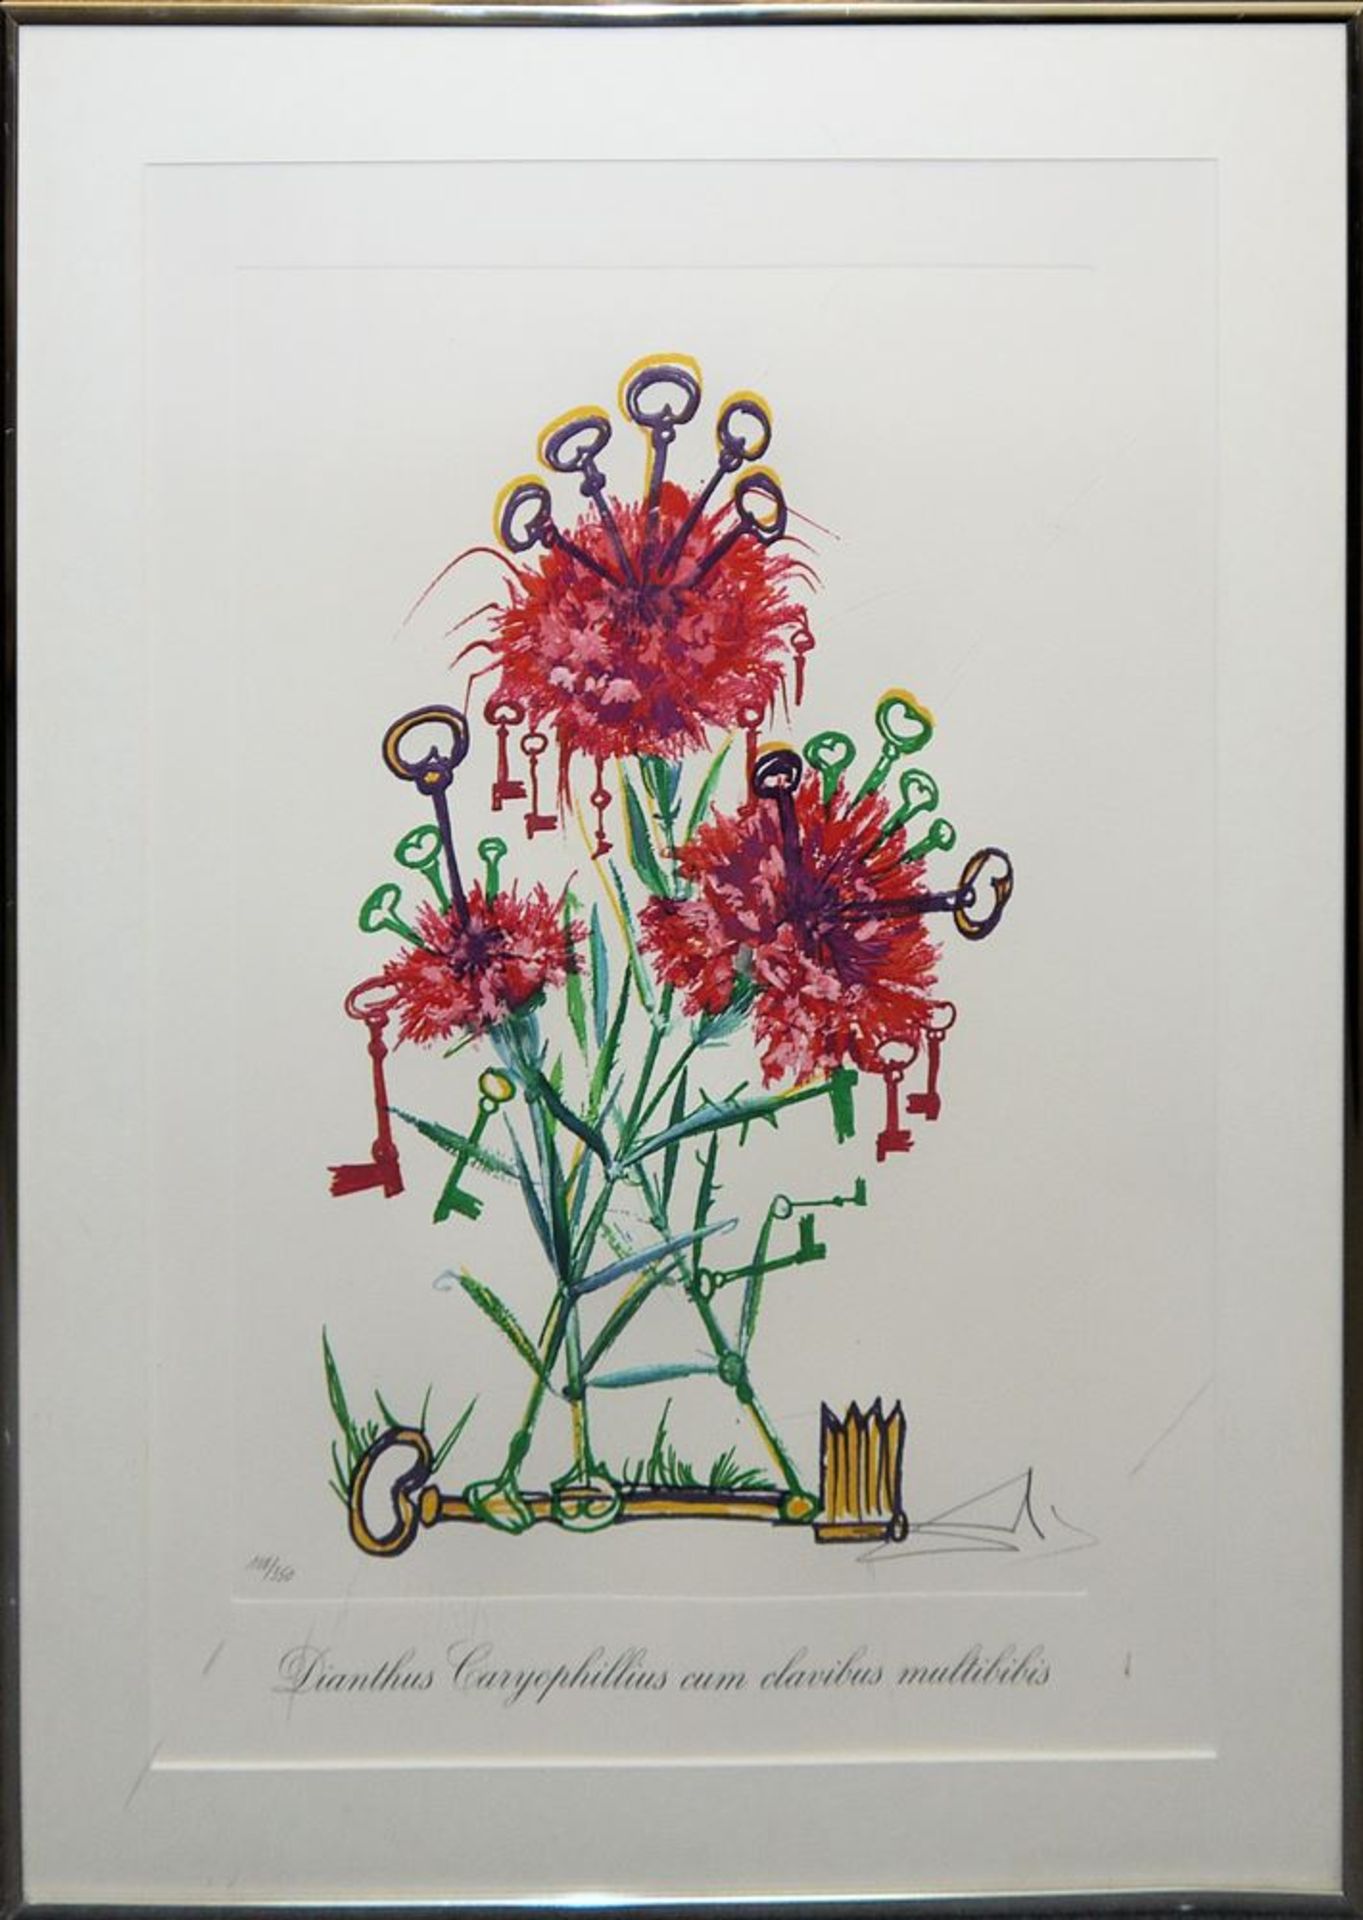 Salvador Dali, "Surrealistic Flowers", 1972, 5 Heliogravuren mit Reliefprägung (Carborundum), alle